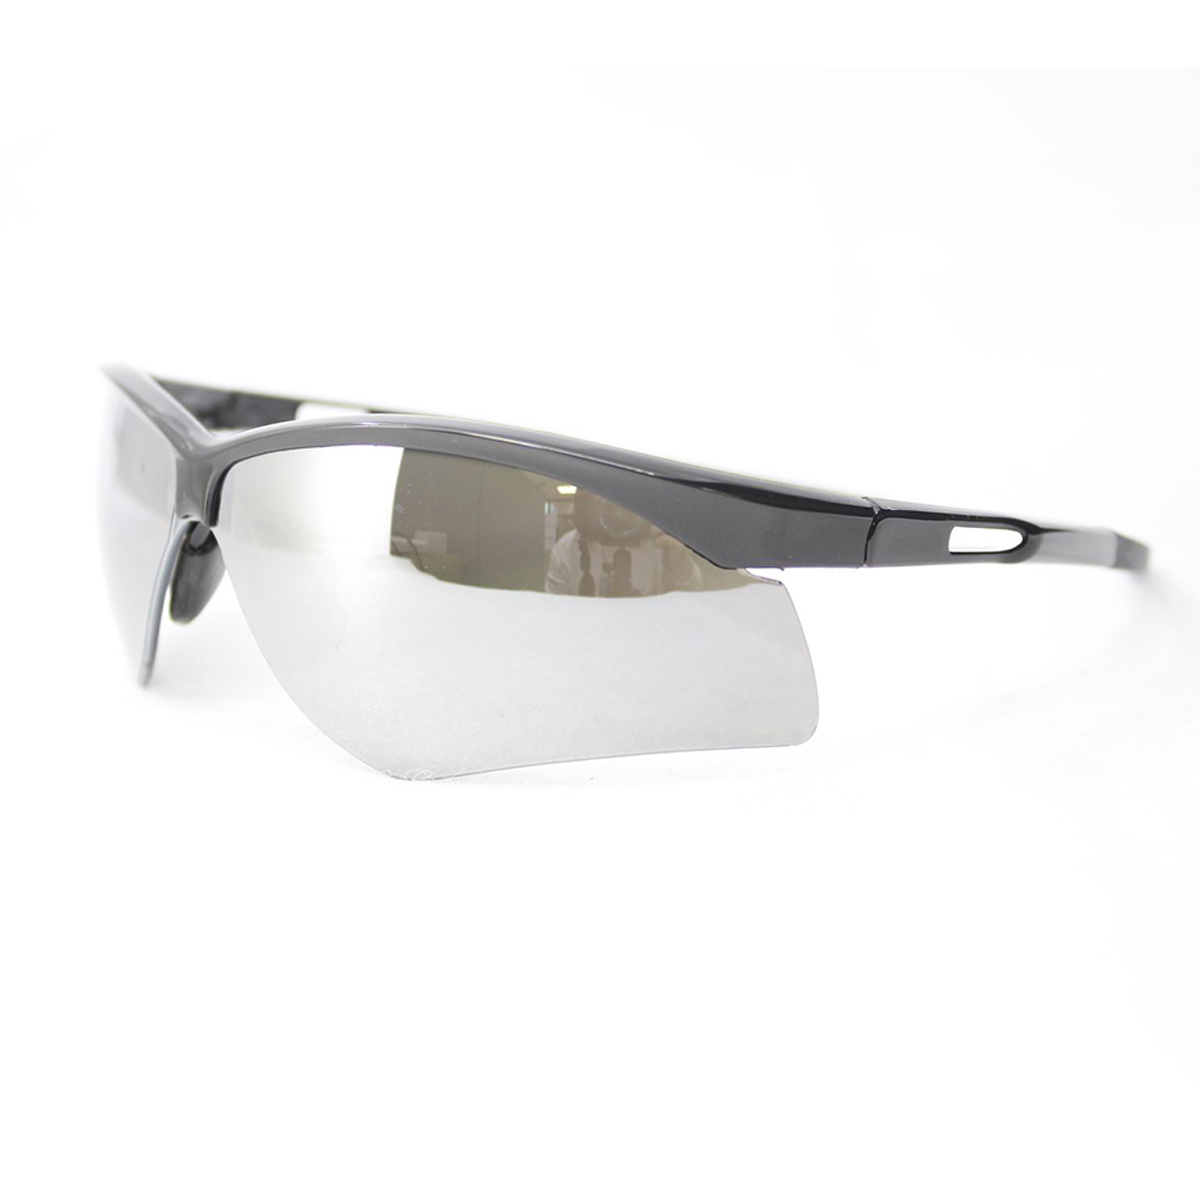 Silverline Safety Glasses Shadow AP140898 Lightweight Modern Frame 